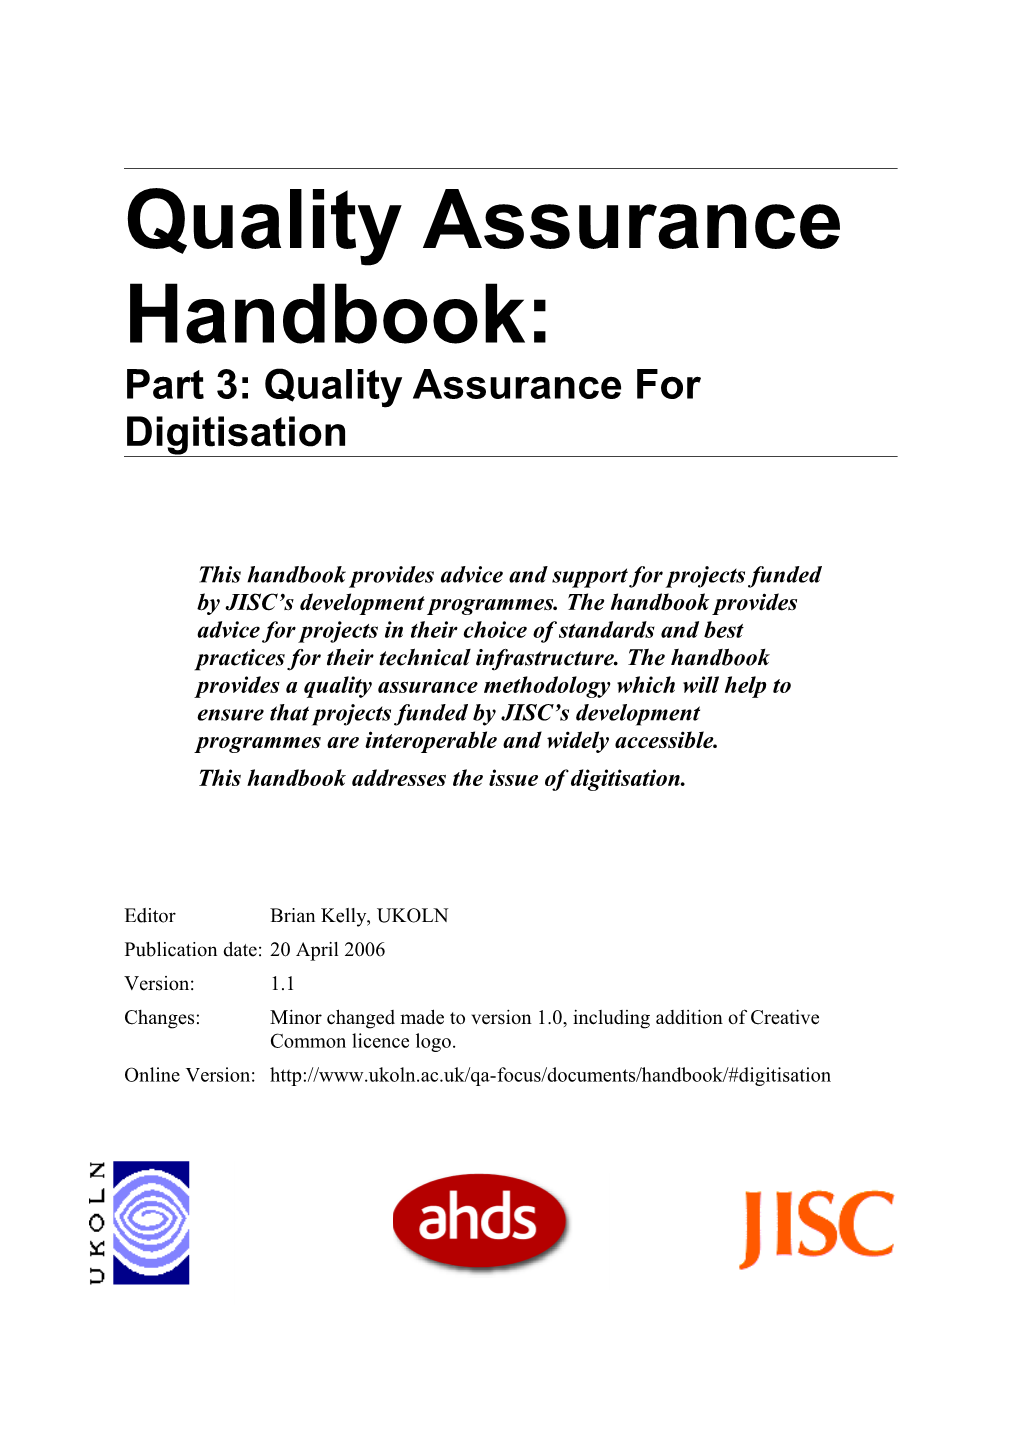 Quality Assurance Handbook: About Quality Assurance